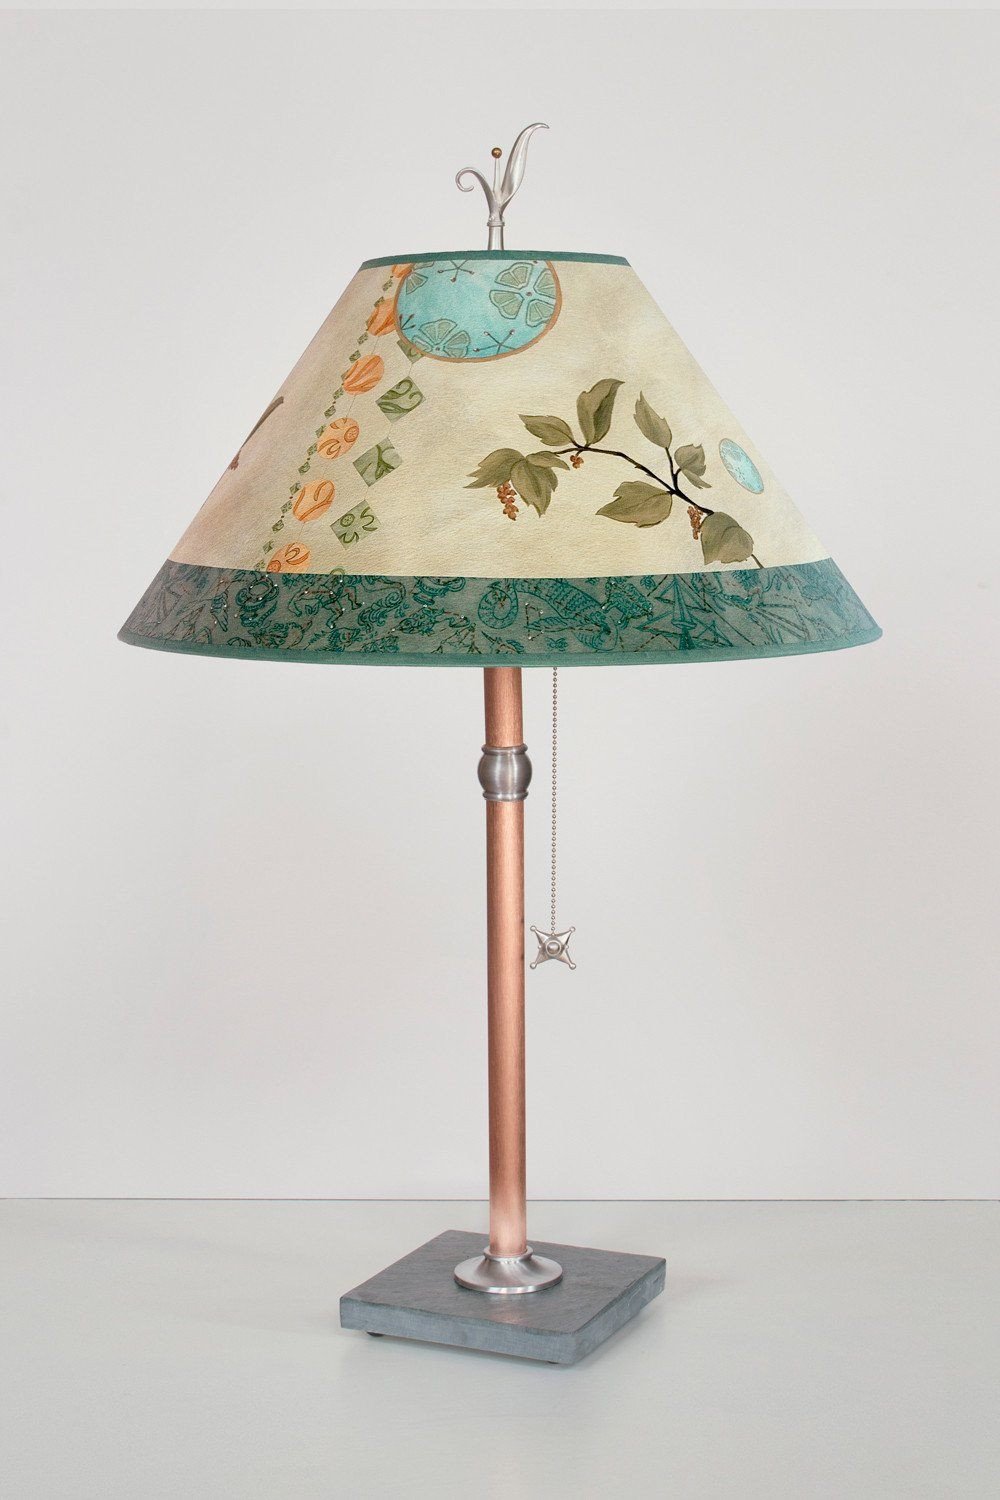 Celestial Leaf large conical copper table lamp lit